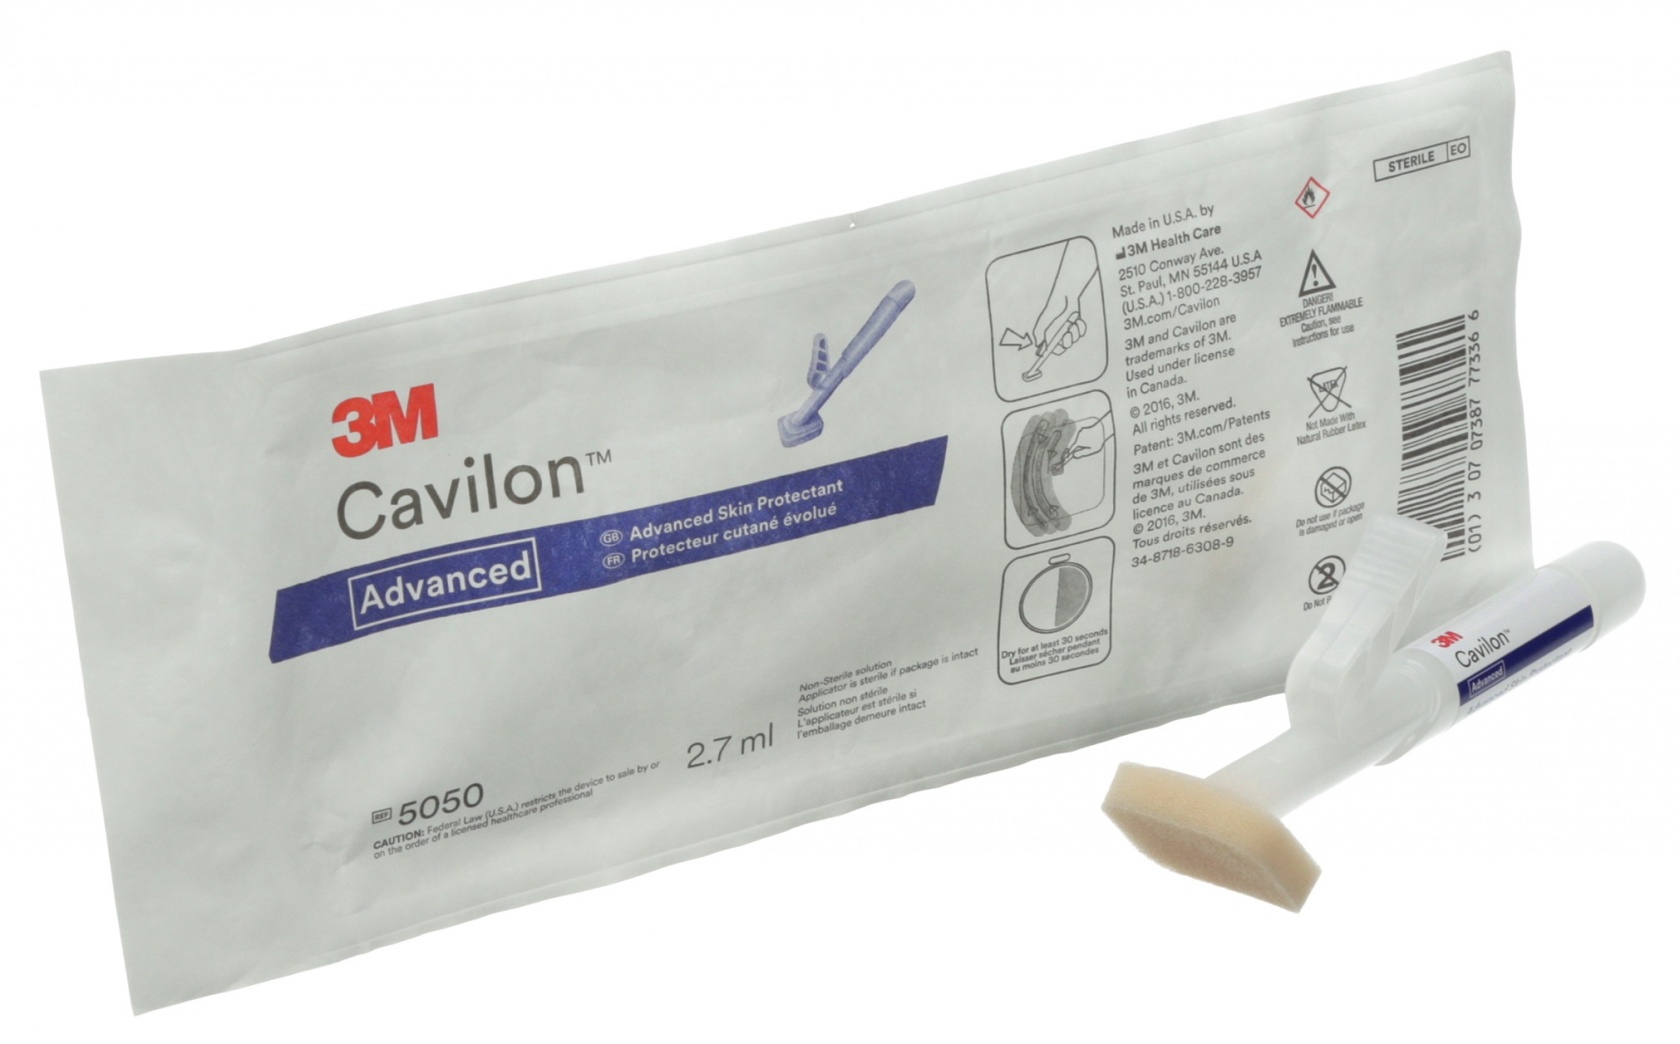 3M Cavilon Advanced Skin Protectant Wand 0.7ml image 1